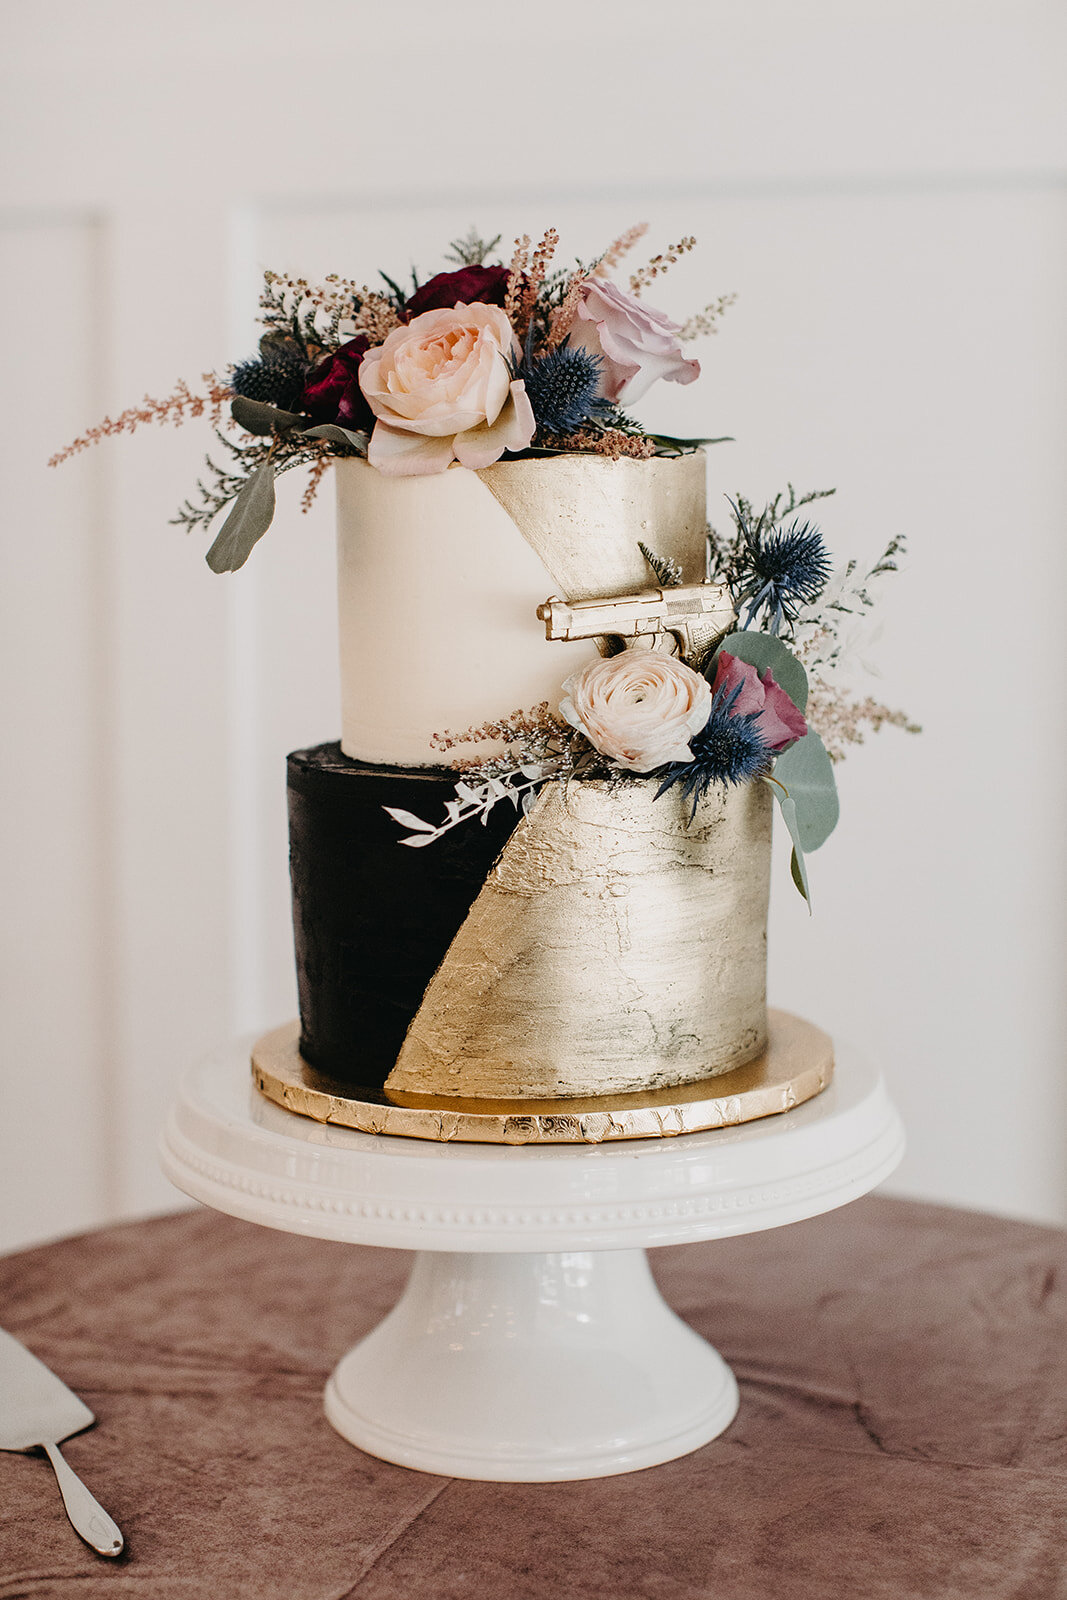 21 Wedding Cake James Bond Gold Black Florals.jpg